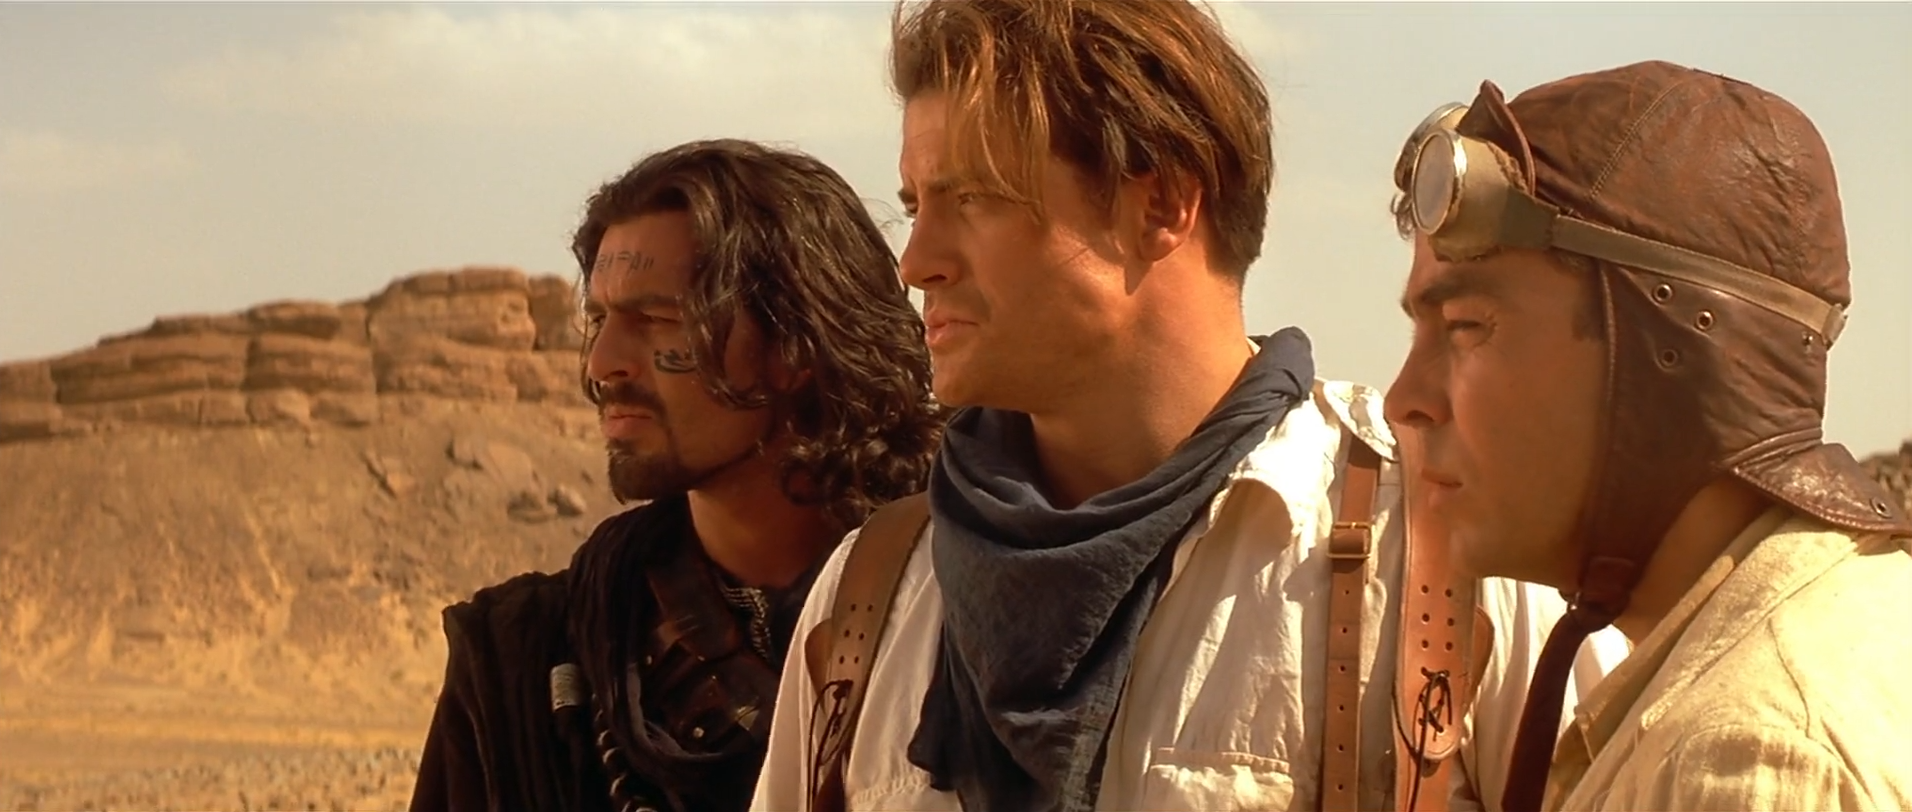 Brendan Fraser Oded Fehr John Hannah Desert Egypt Movie Characters Movies Film Stills The Mummy Men  1912x812